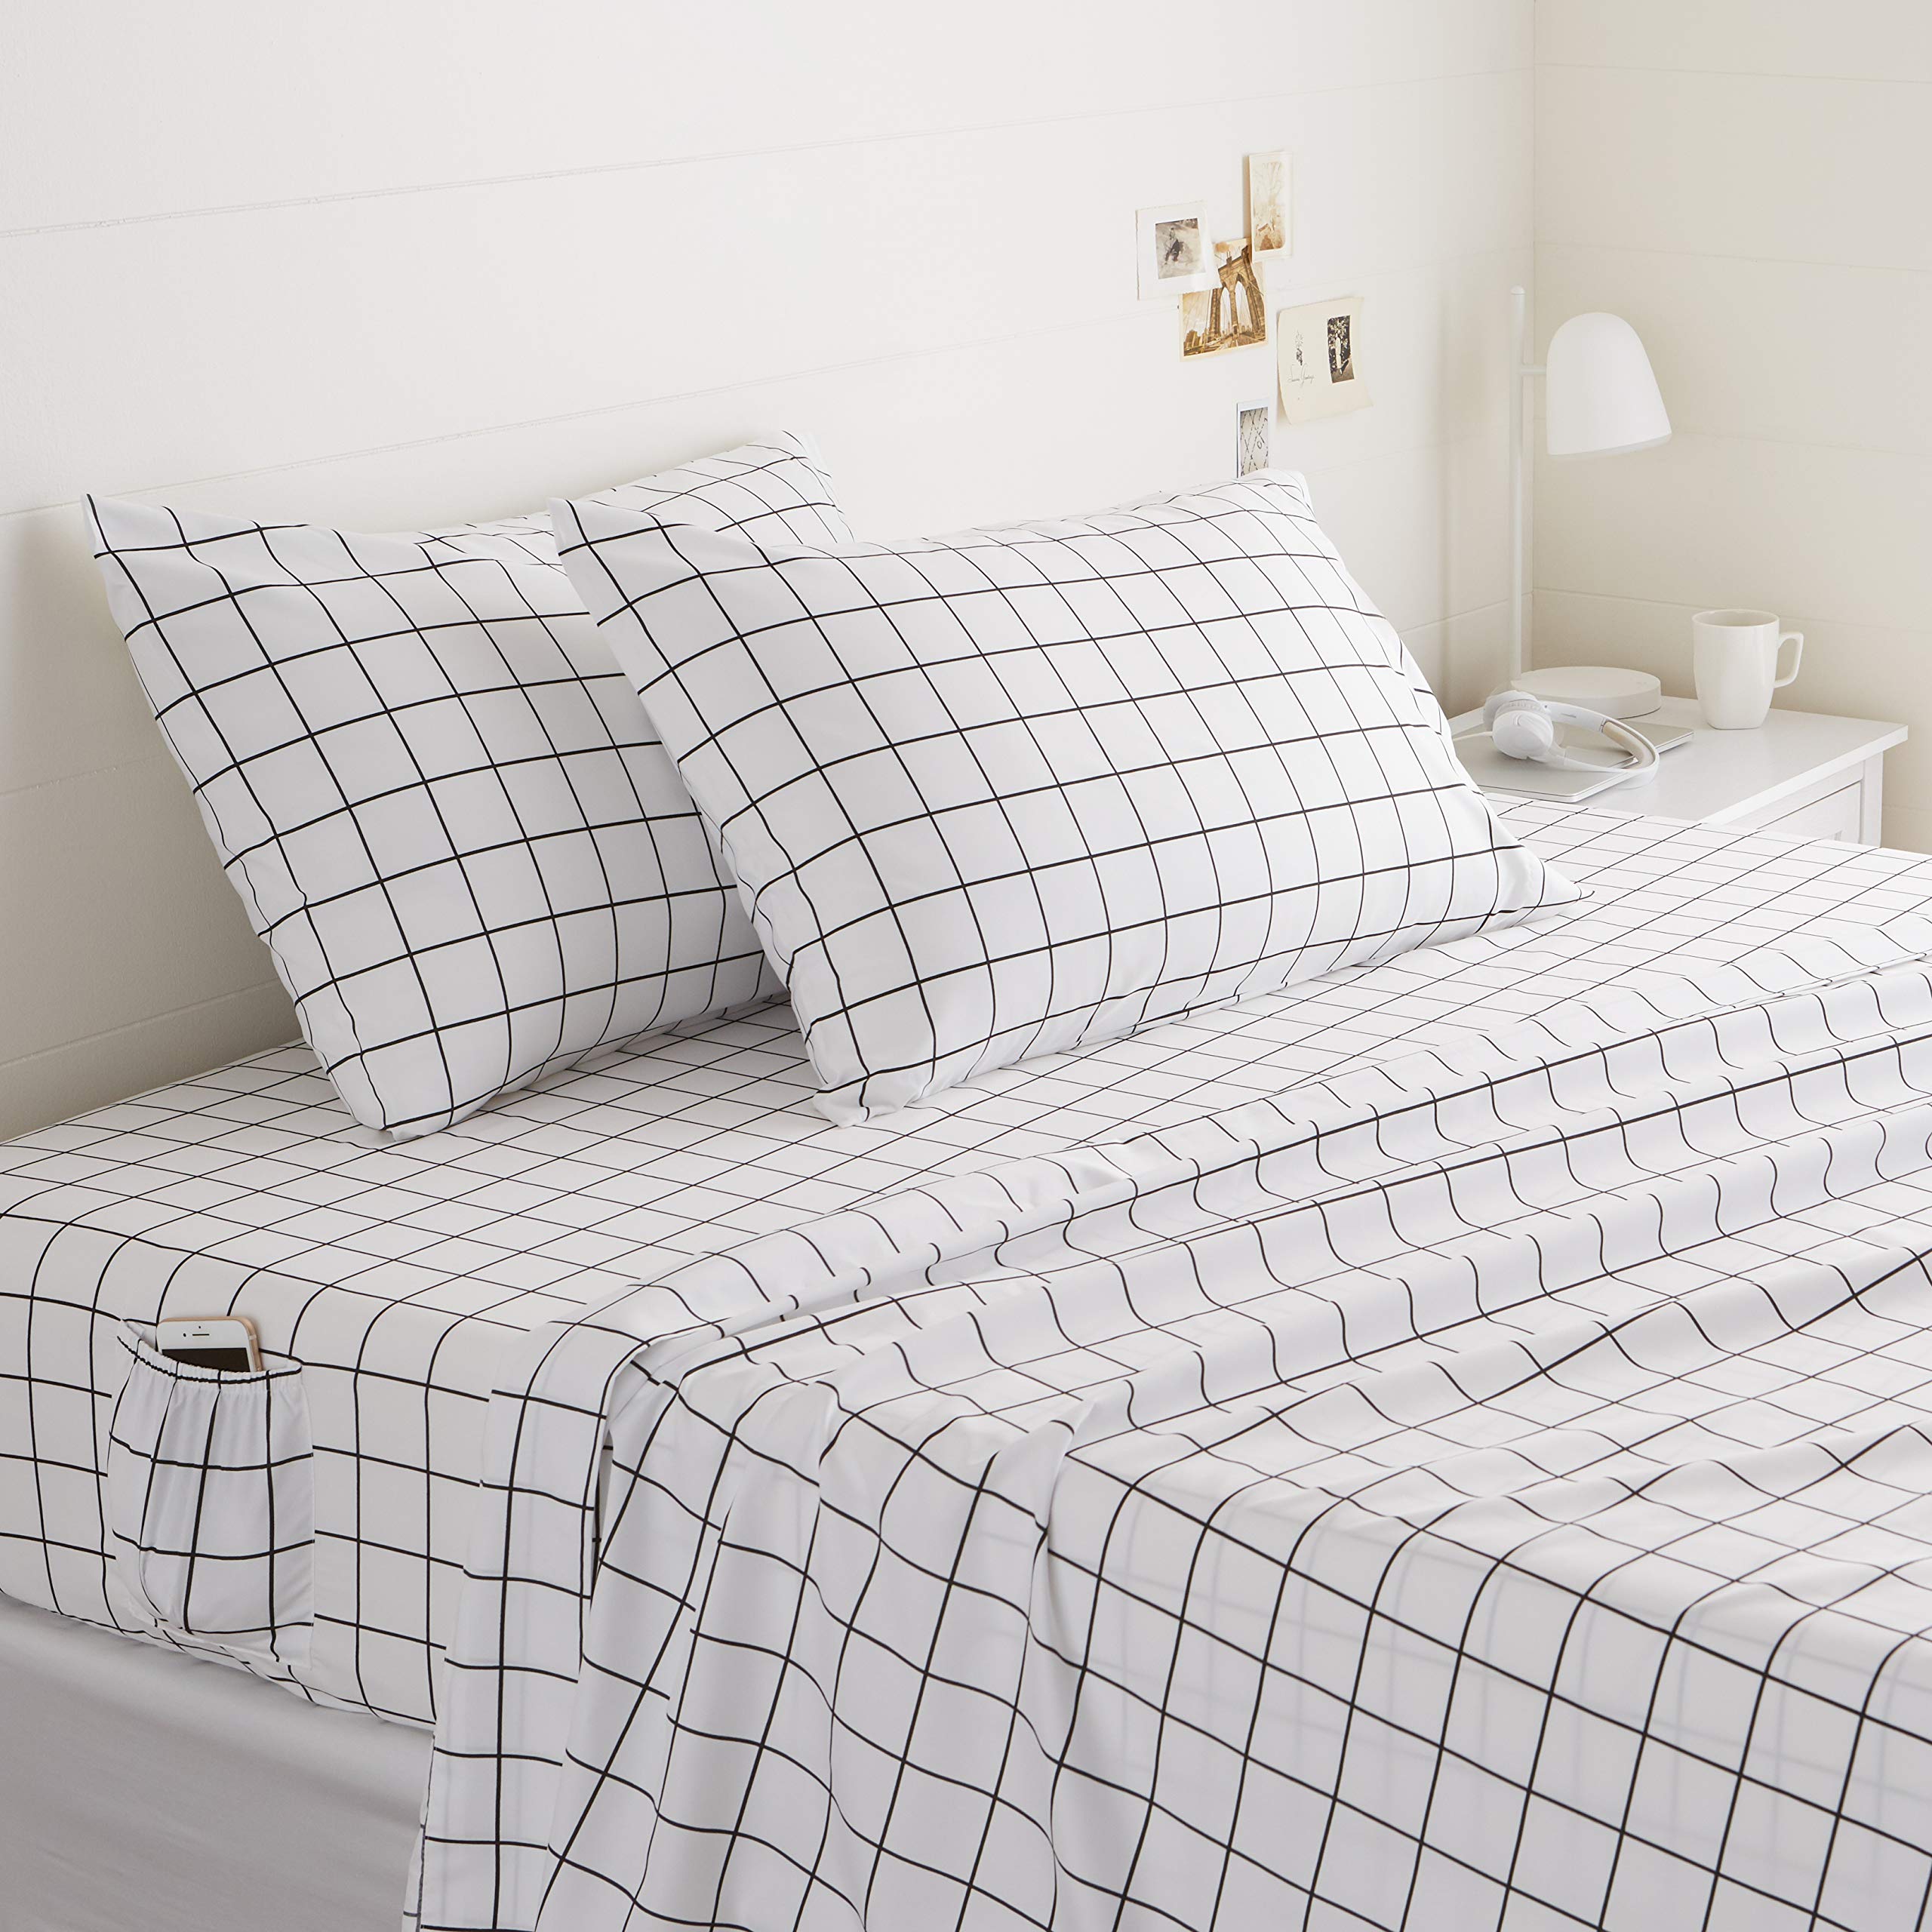 Soft Microfiber 4-Piece Bed Sheet Set with Elastic Side Pockets